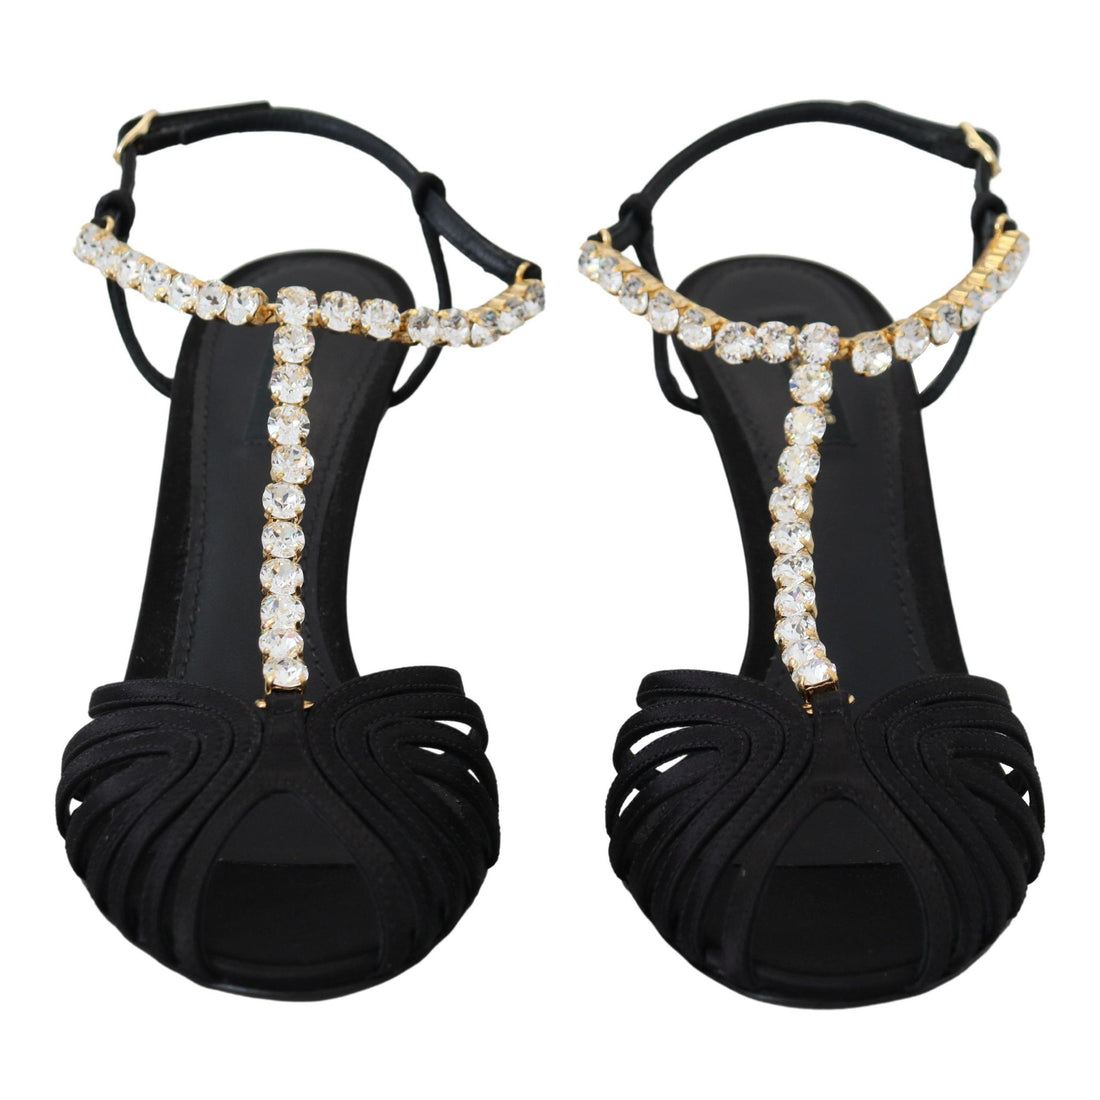 Dolce & Gabbana Black Satin Clear Crystal T-strap Sandal Shoes